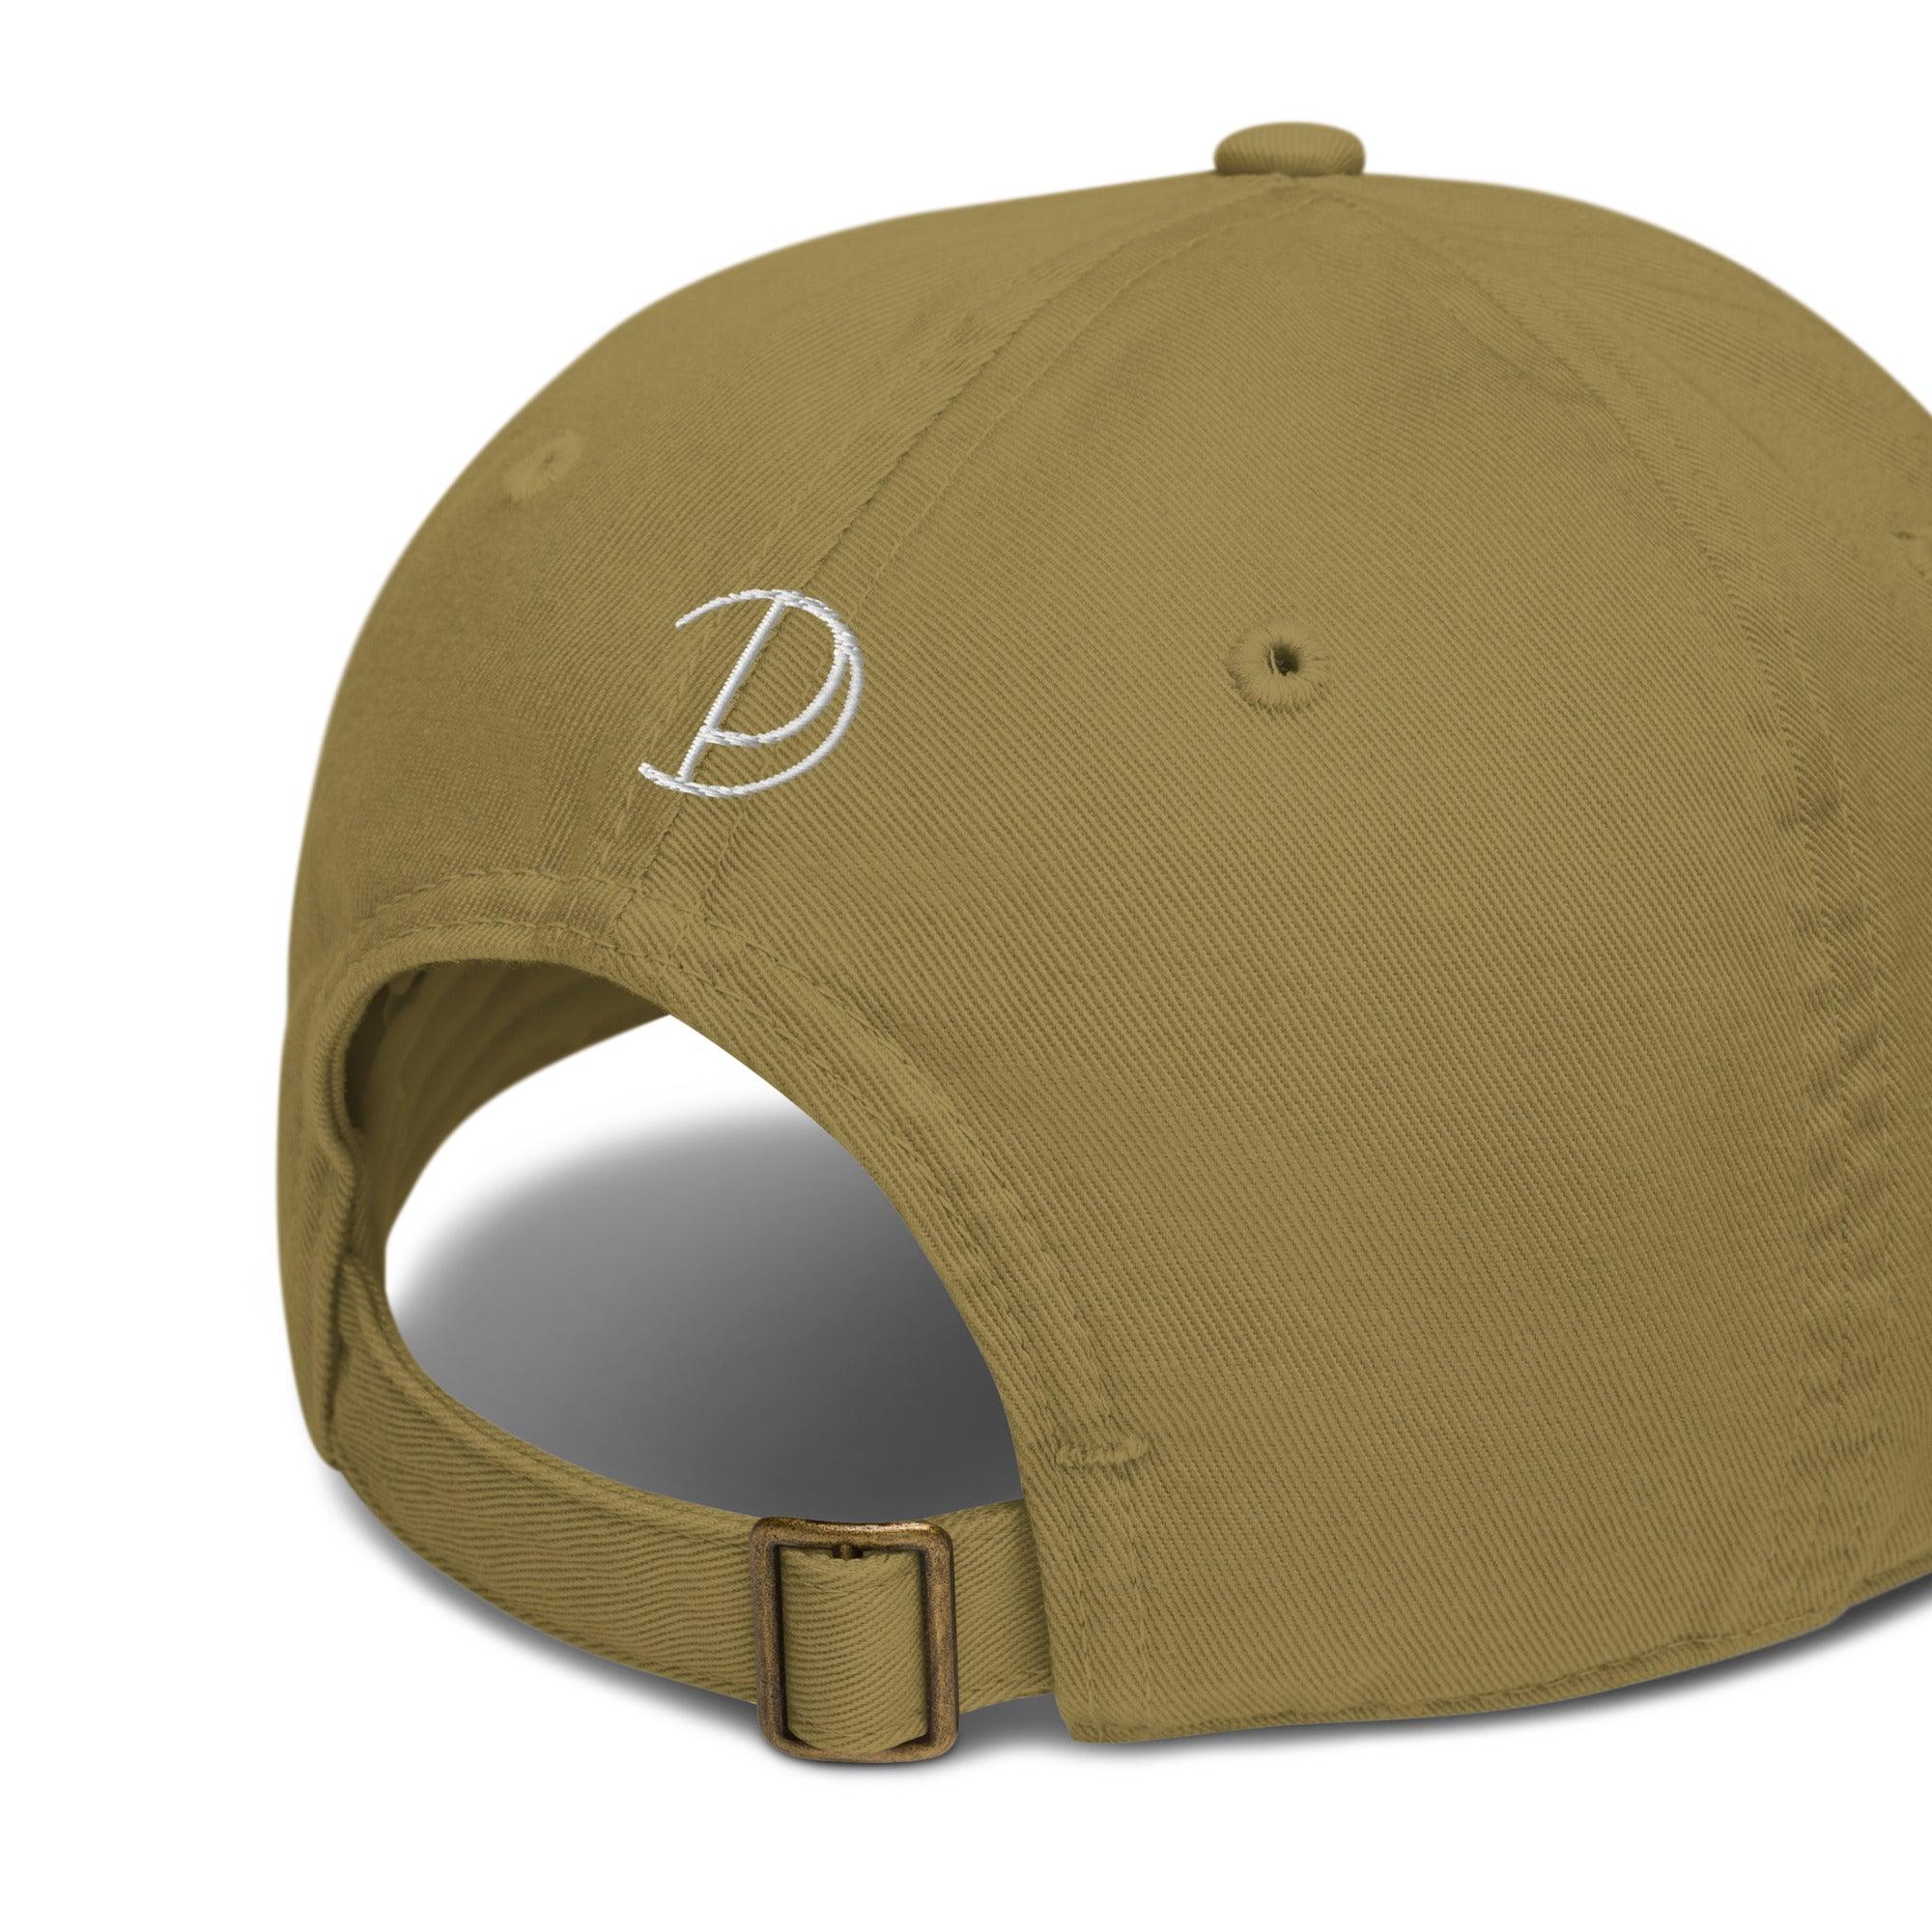 Embroidered P Baseball Cap | Hats | pitod.com